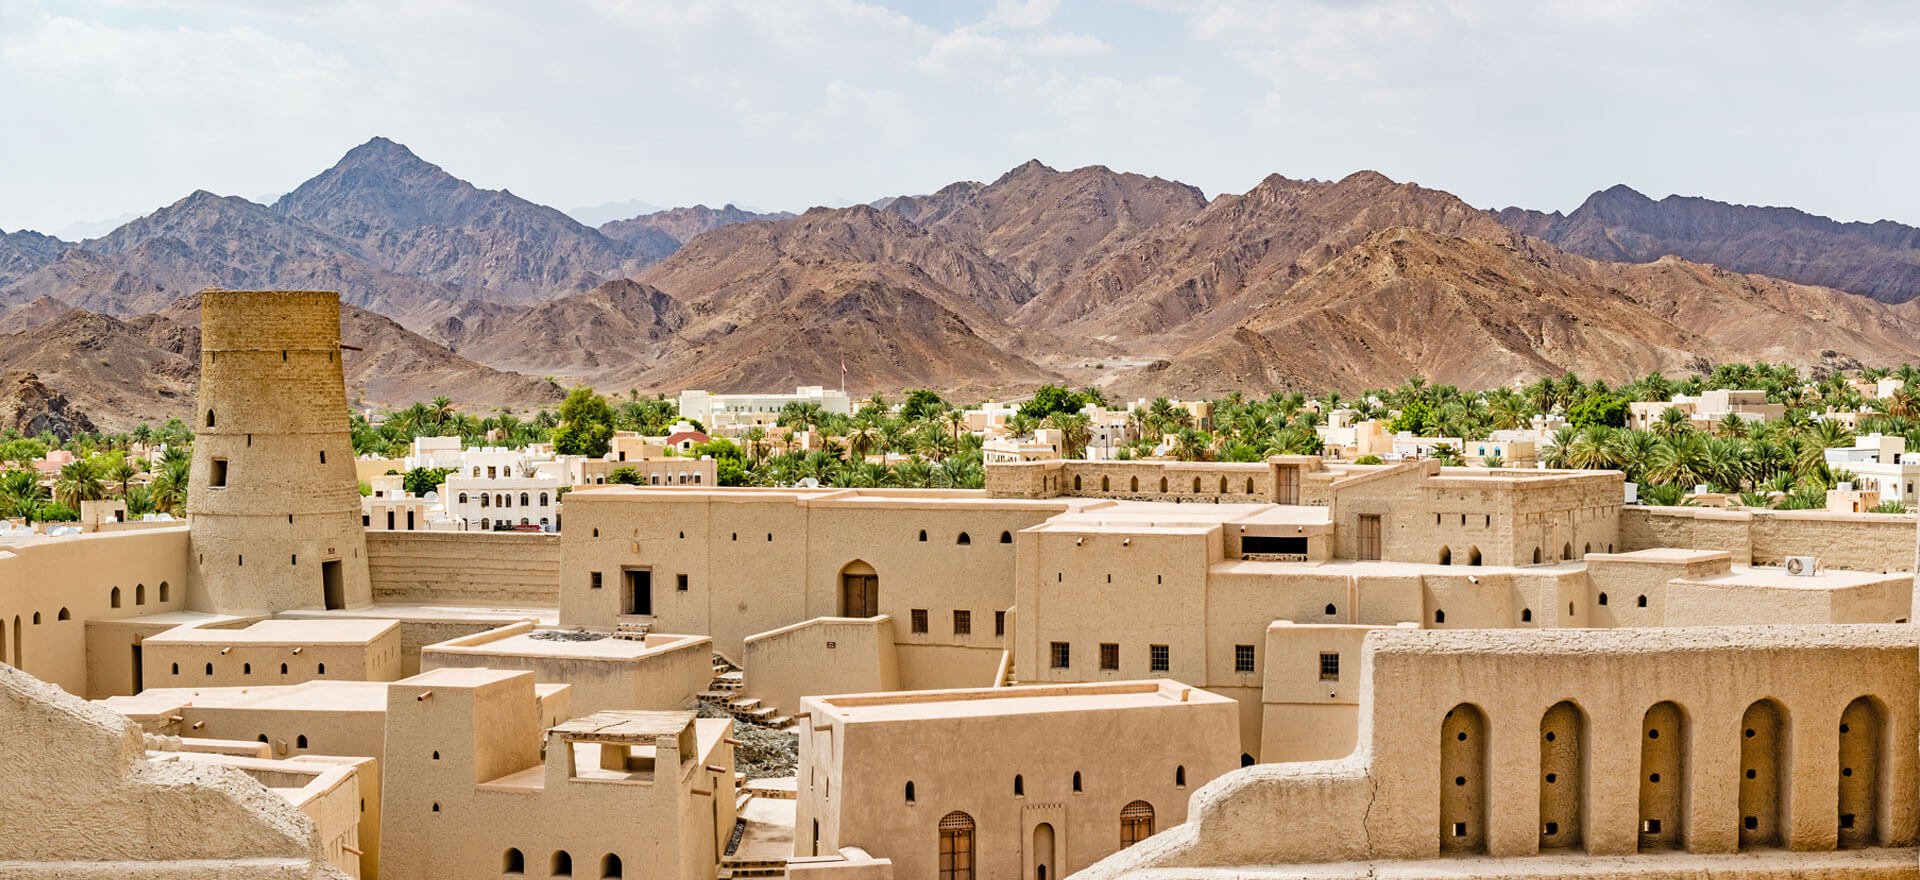 Oman holidays - oasis town